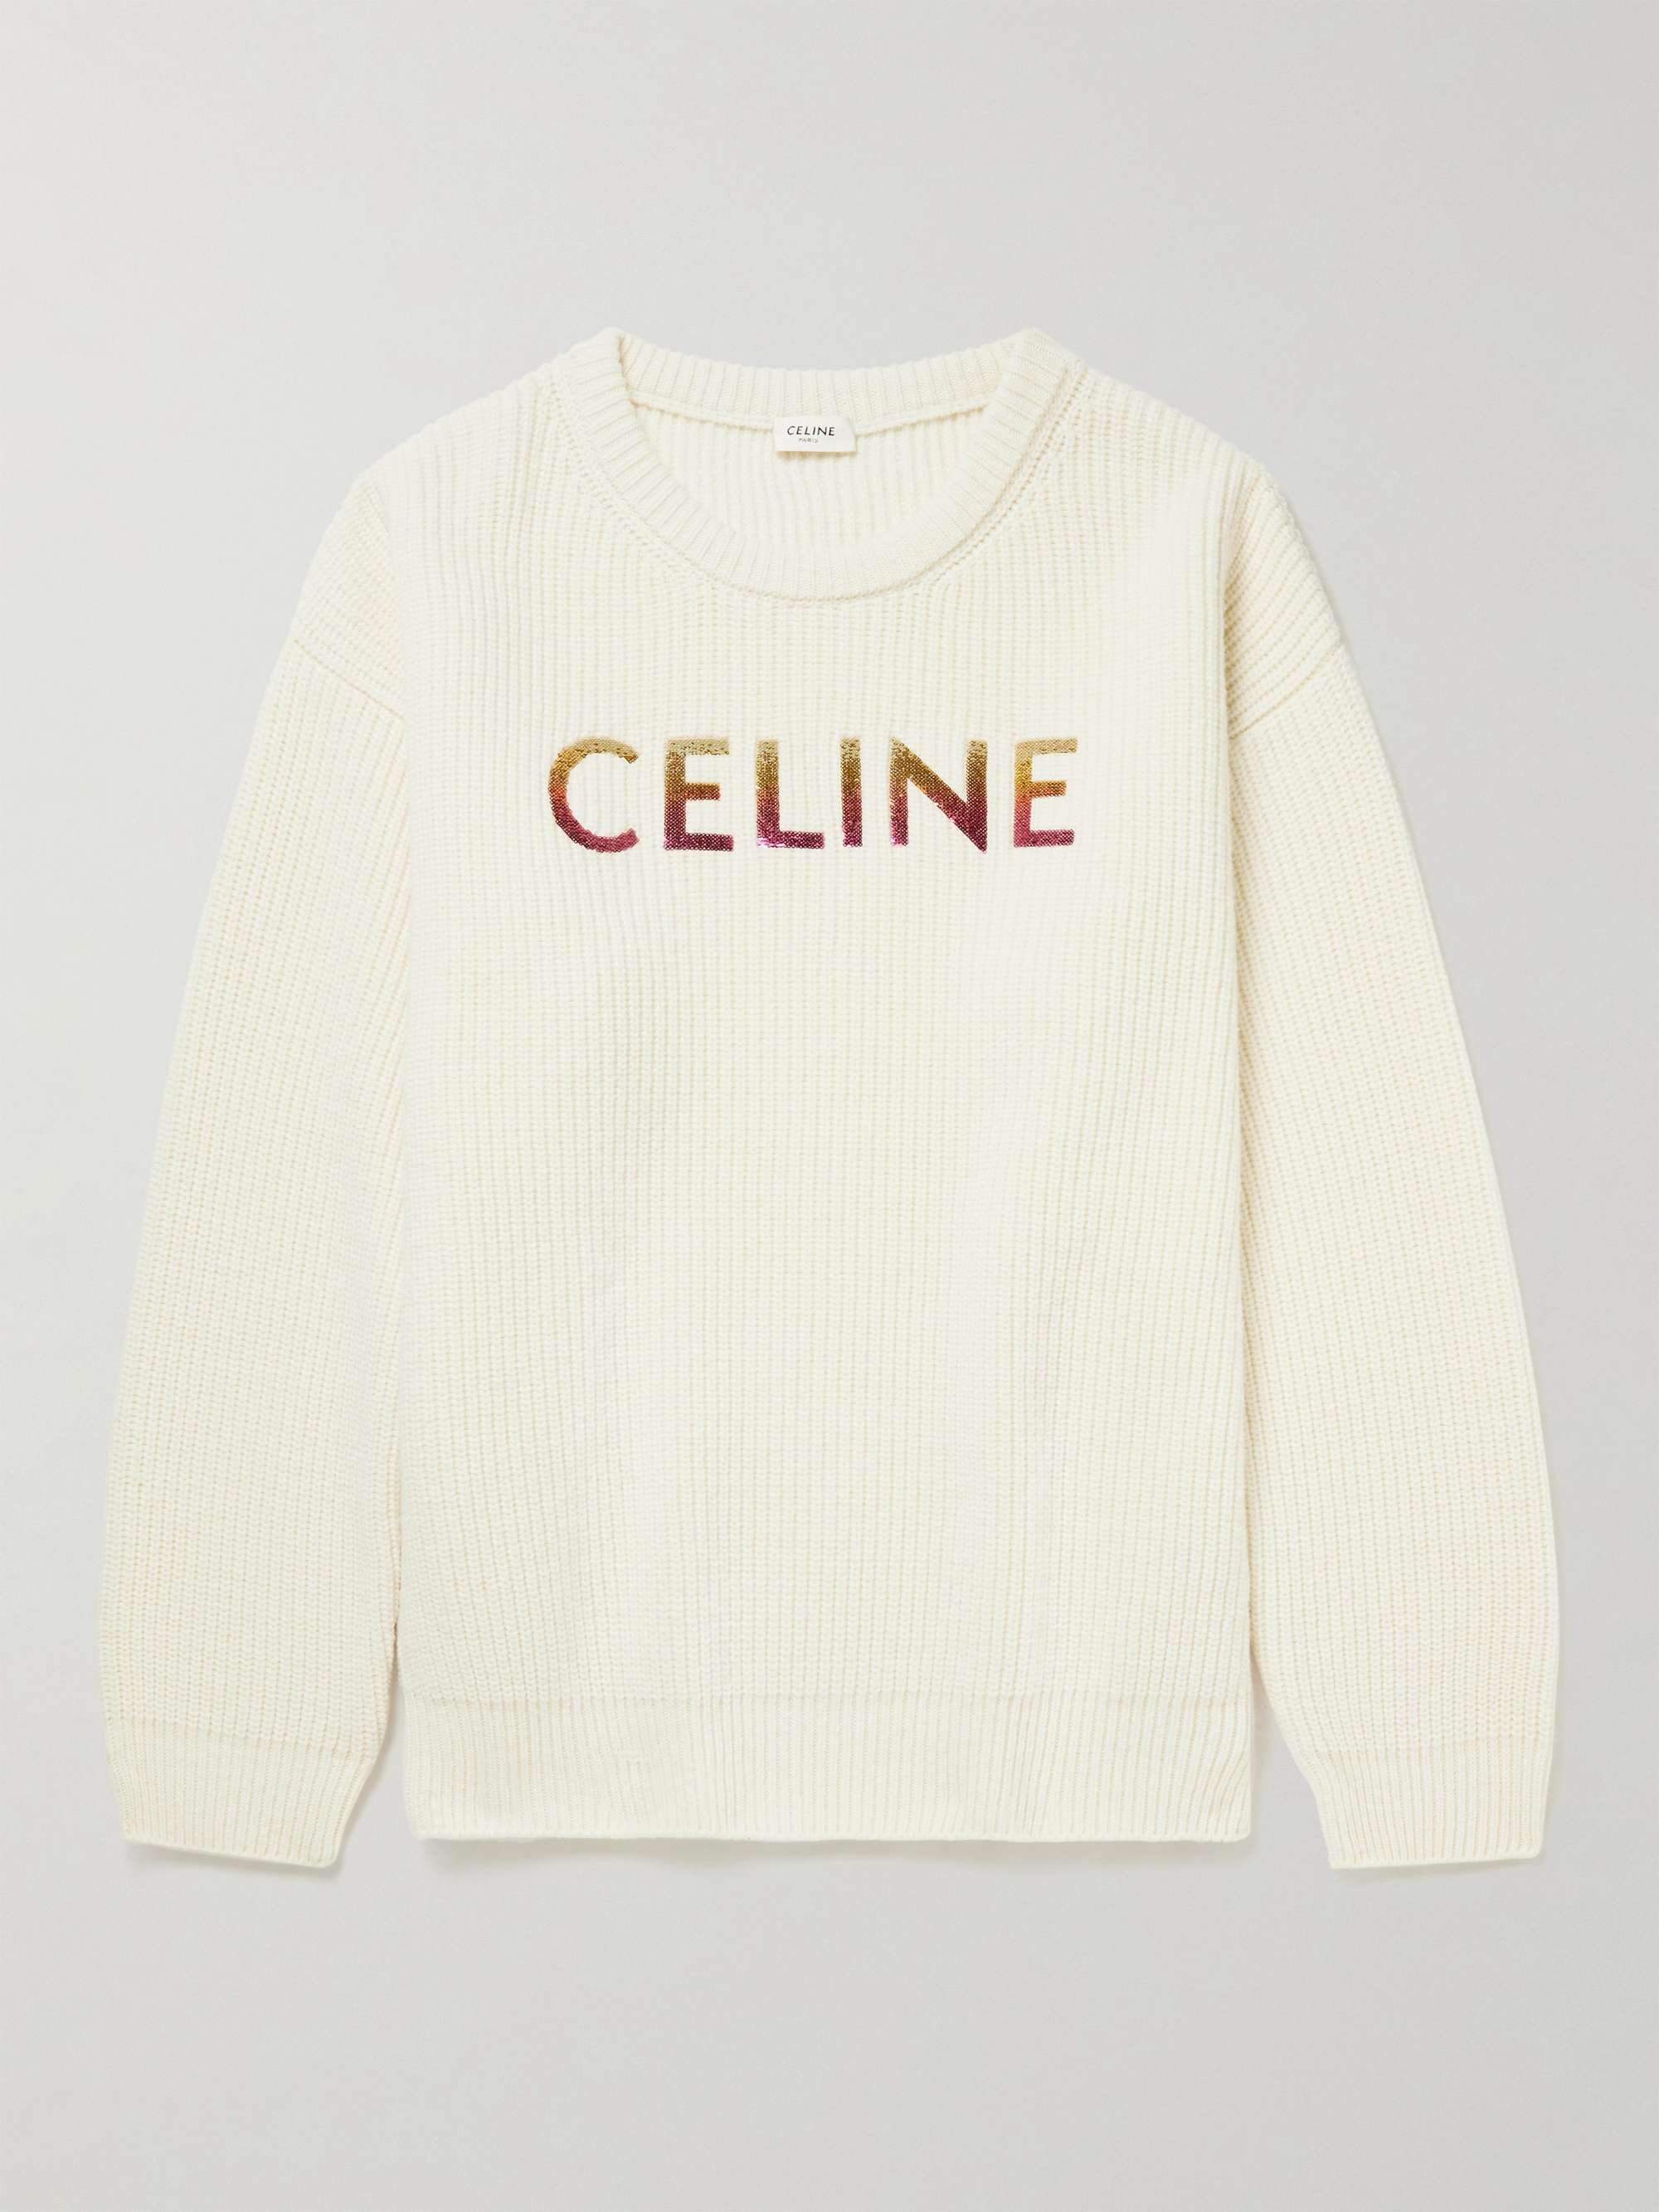 CELINE HOMME Sequin-Embellished Ribbed Wool Sweater